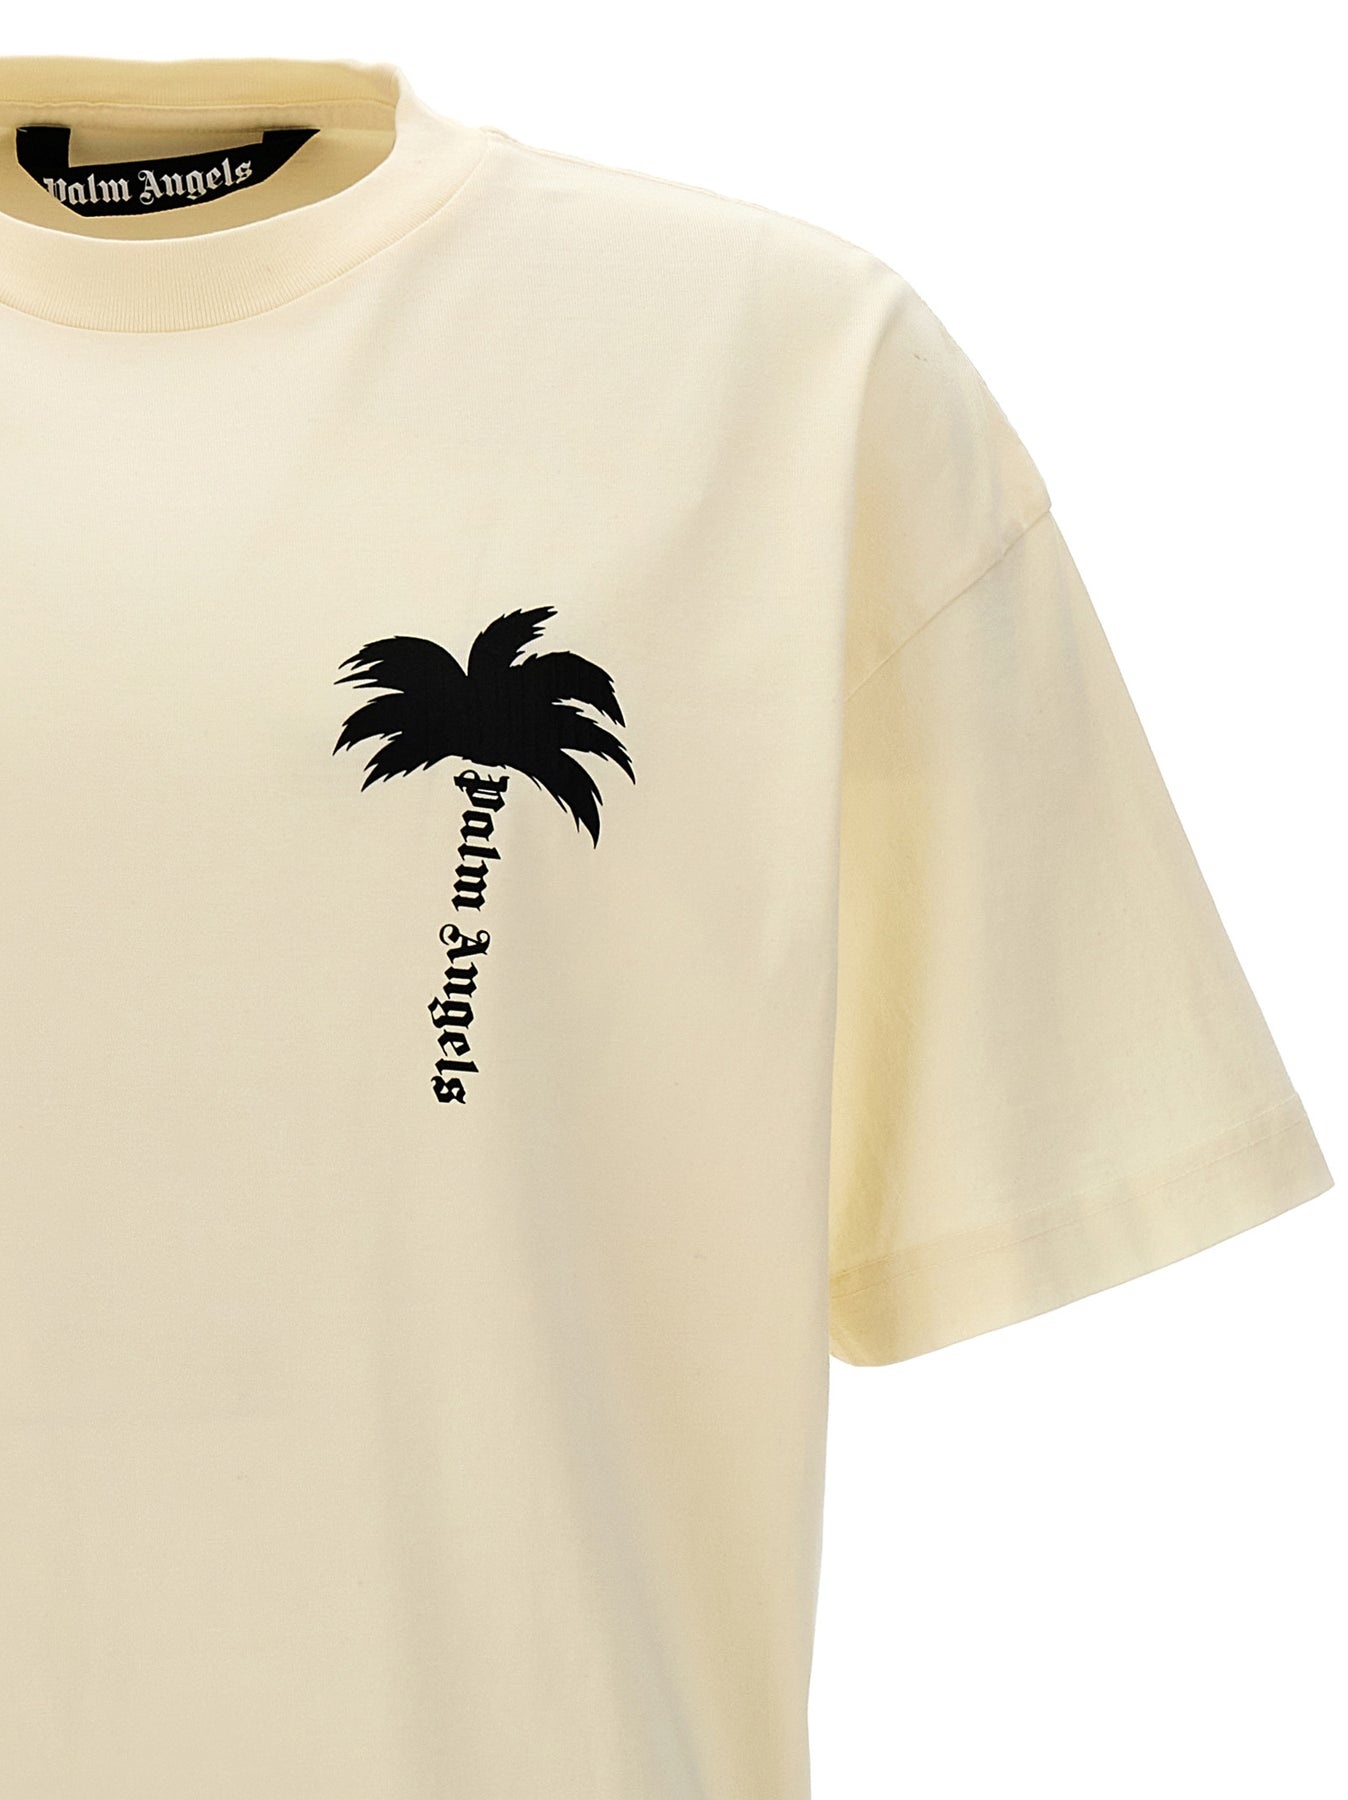 The Palm T-Shirt White/Black - 3